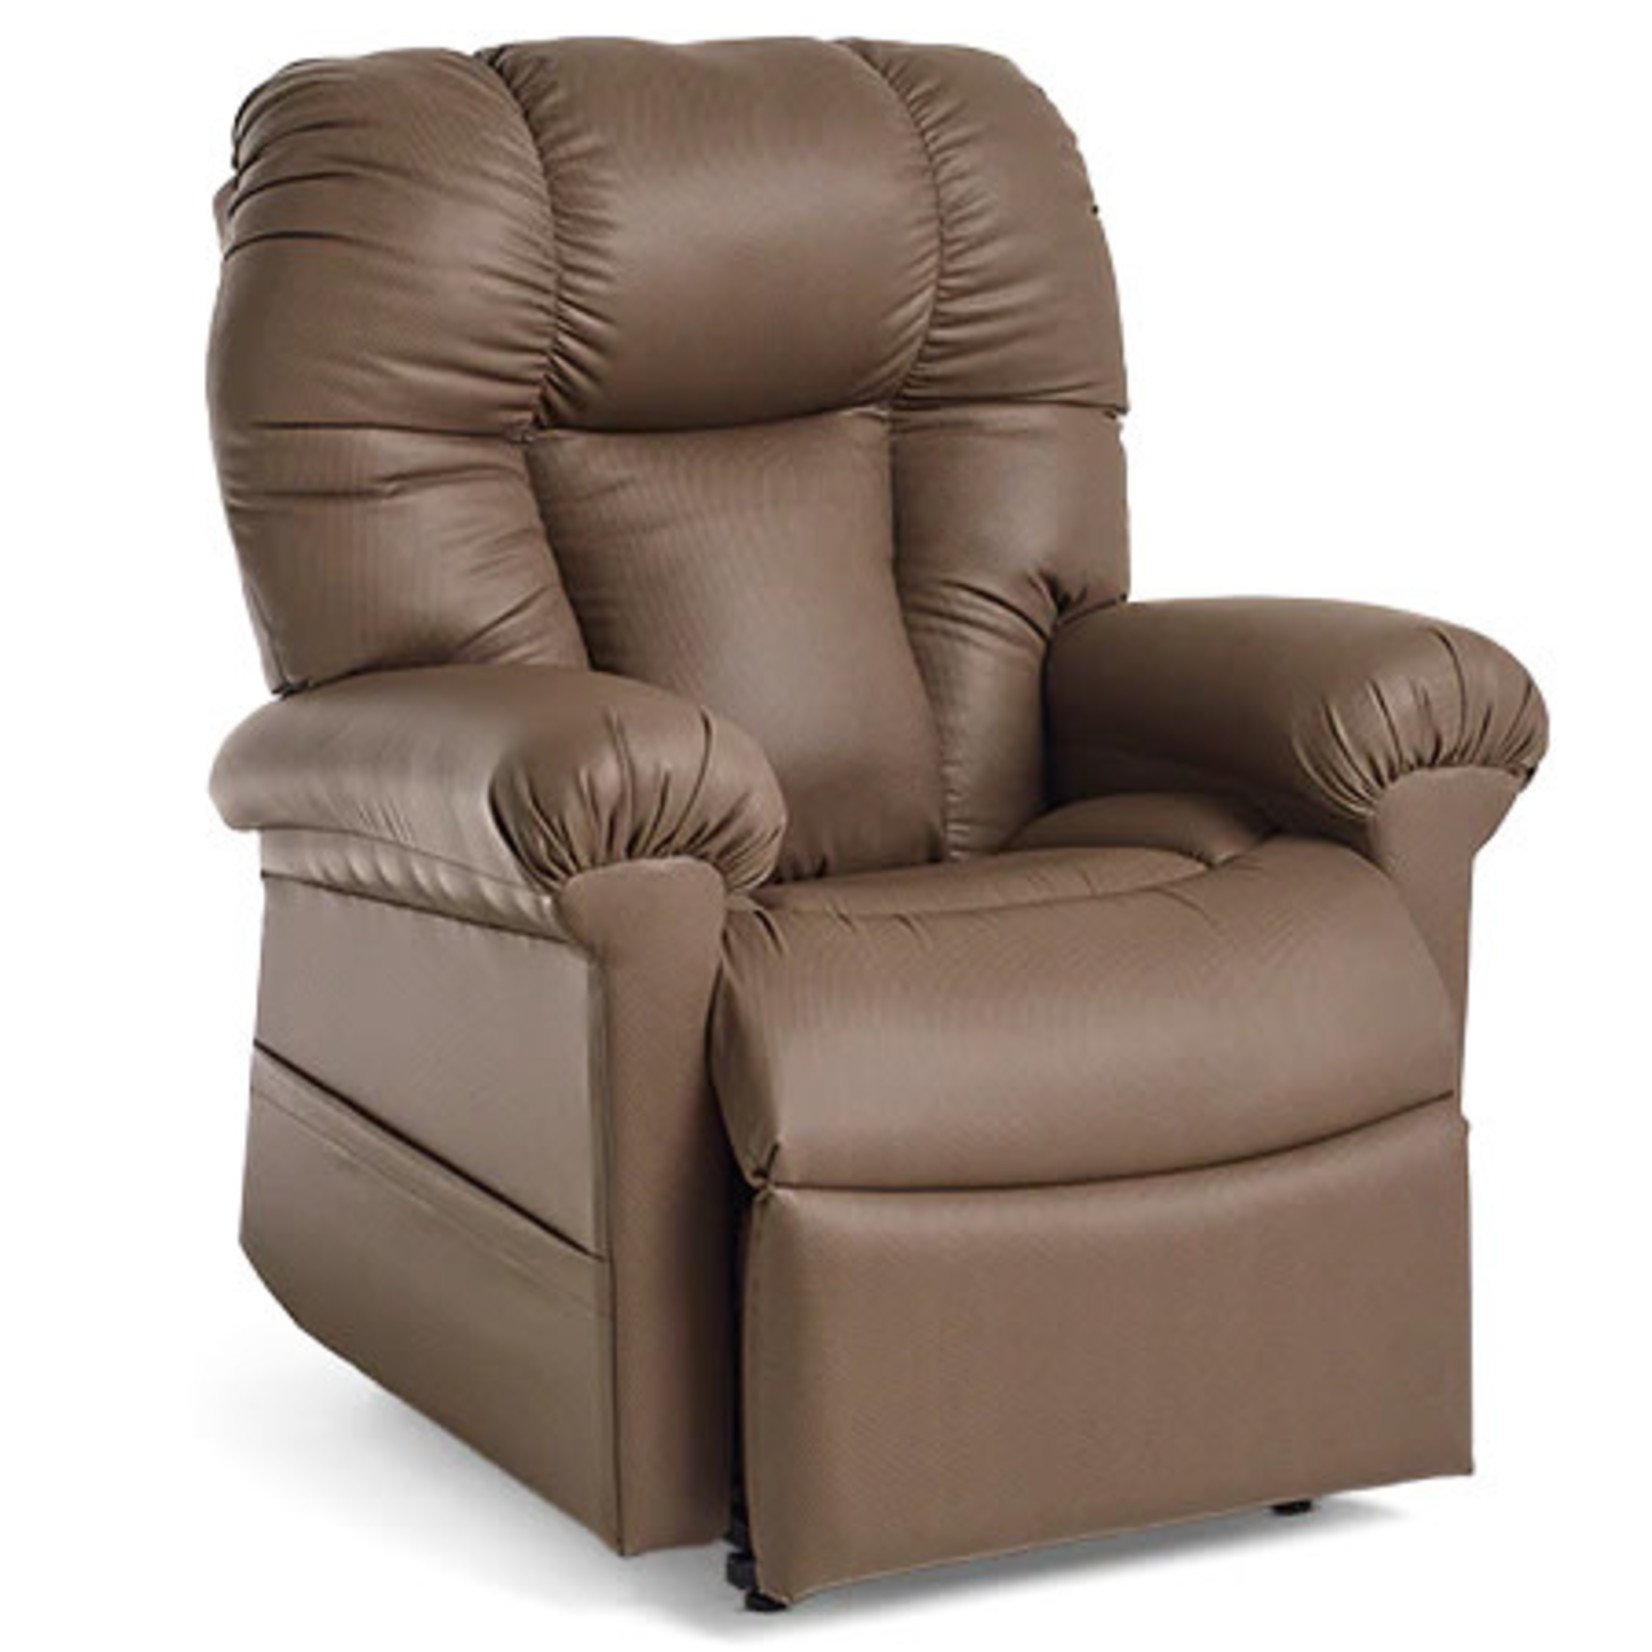 Journey Perfect Sleep Chair Deluxe 5 Zone "Infinite" Positions